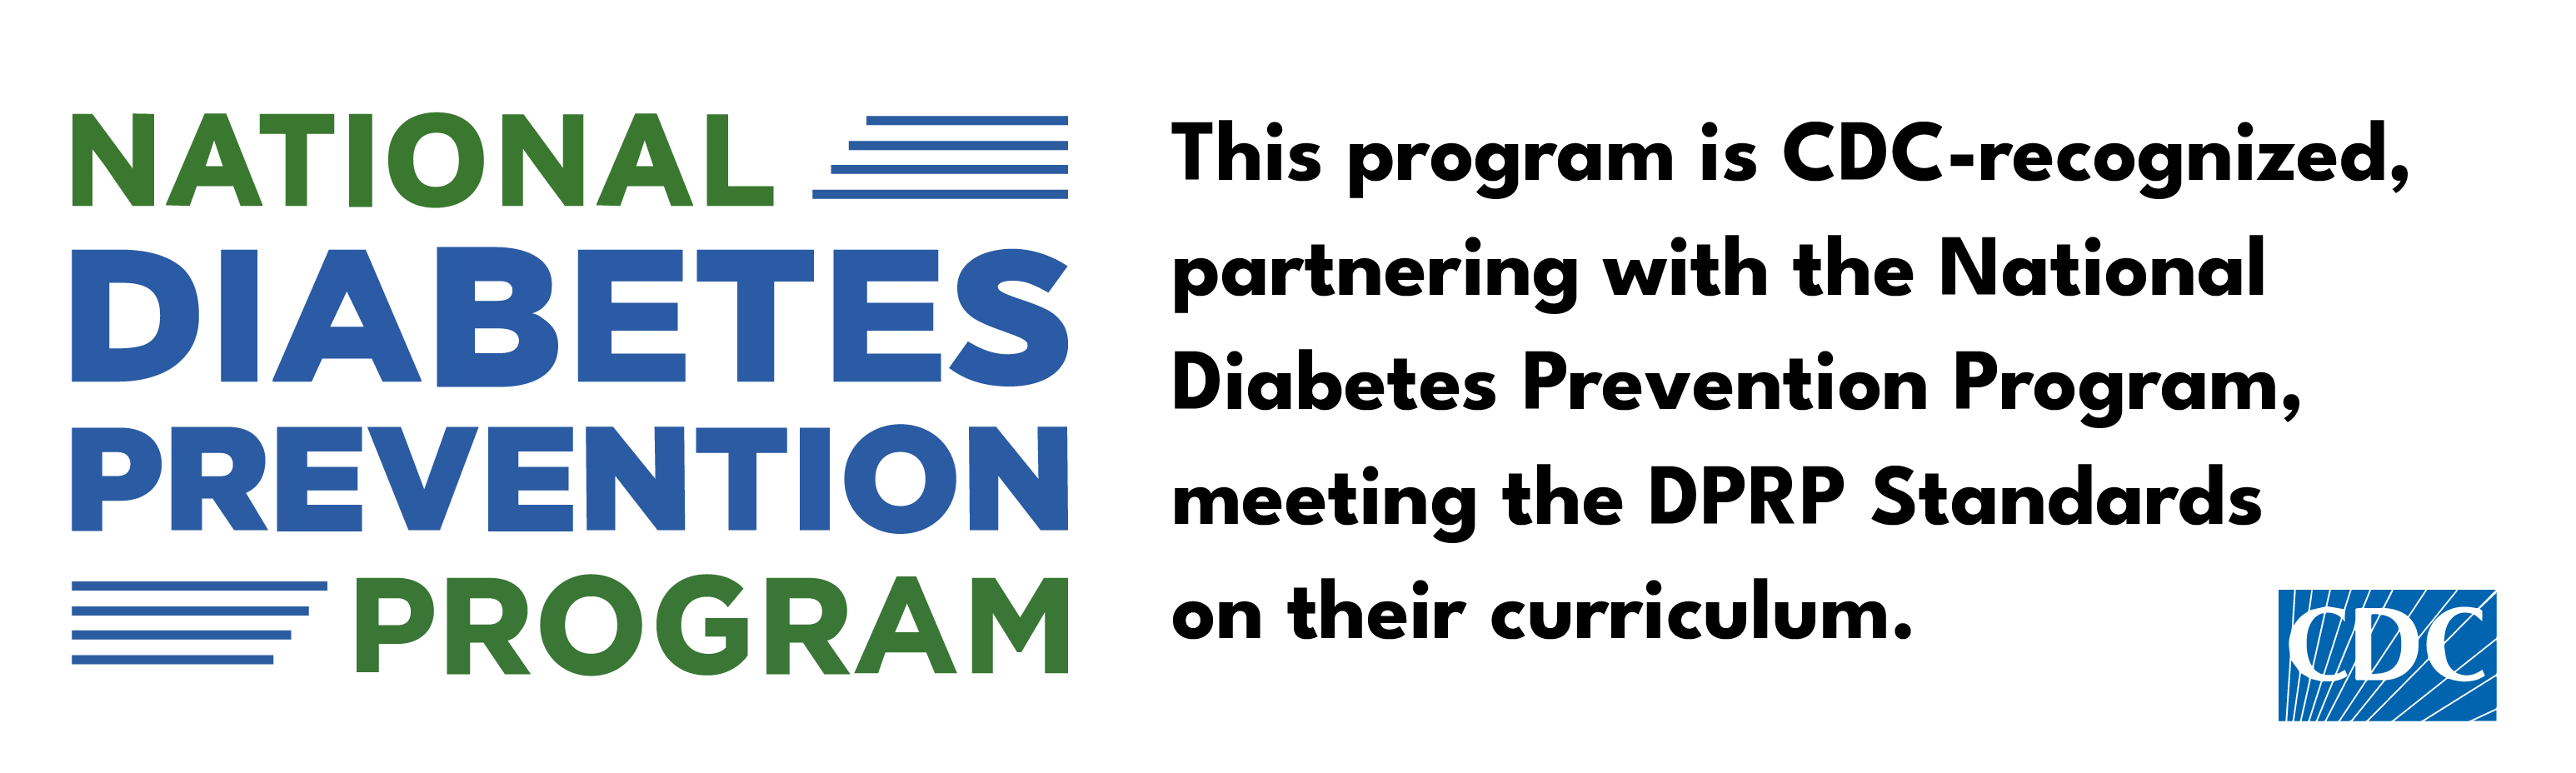 National Diabetes Prevention Program Tag1-01.png